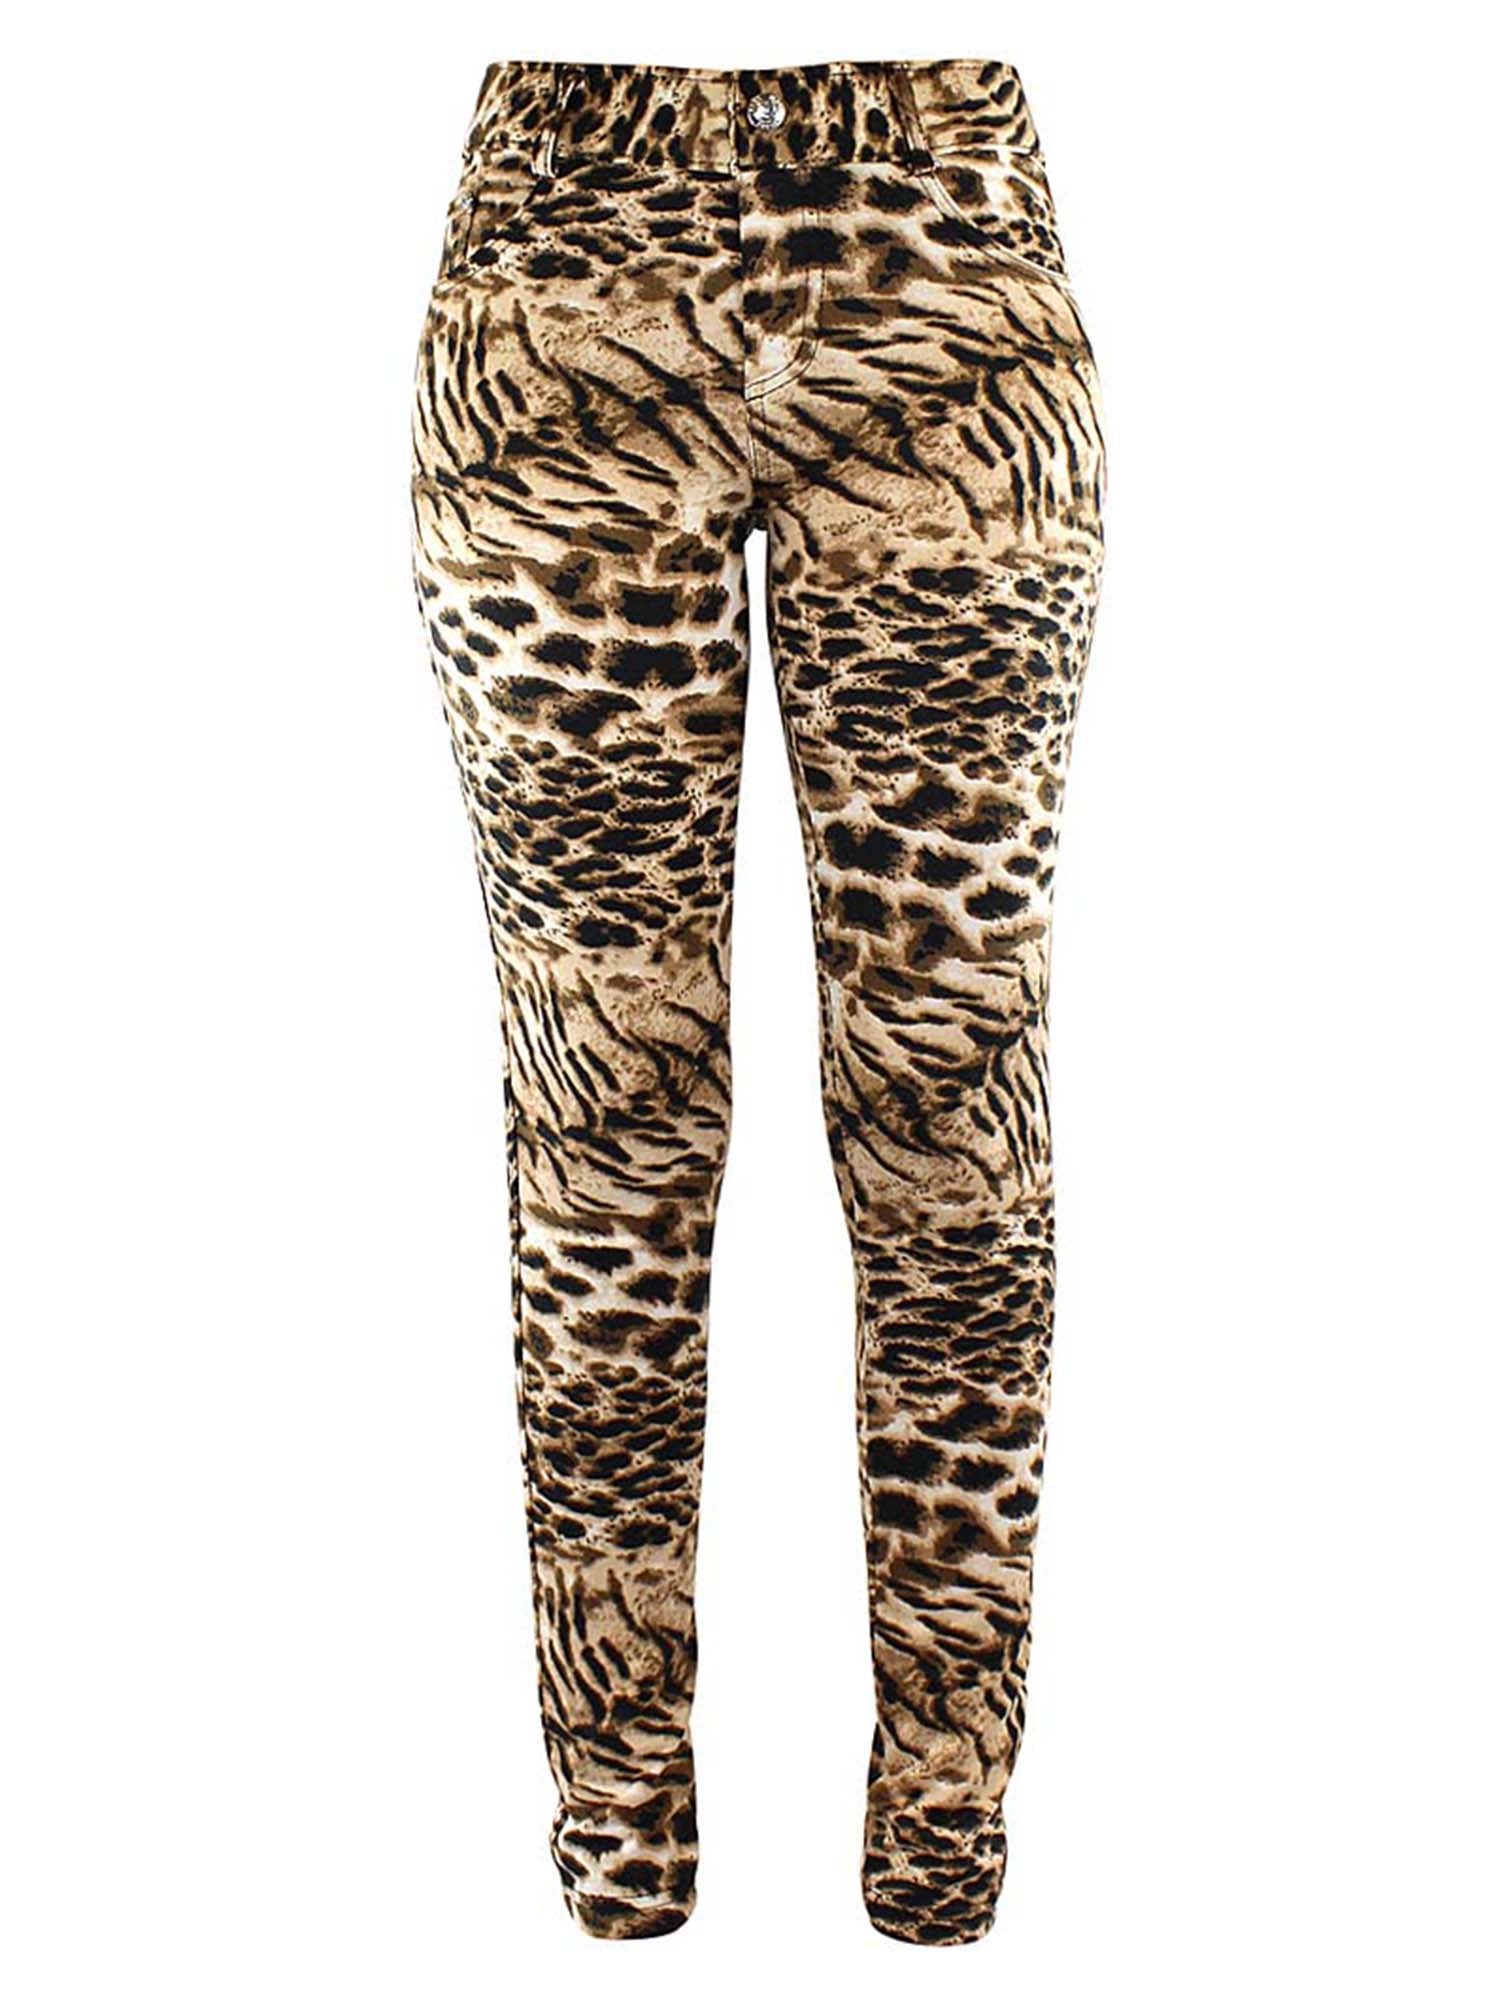 Leopard Print Jeggings With Pockets Size Small/Medium – Luxury Divas